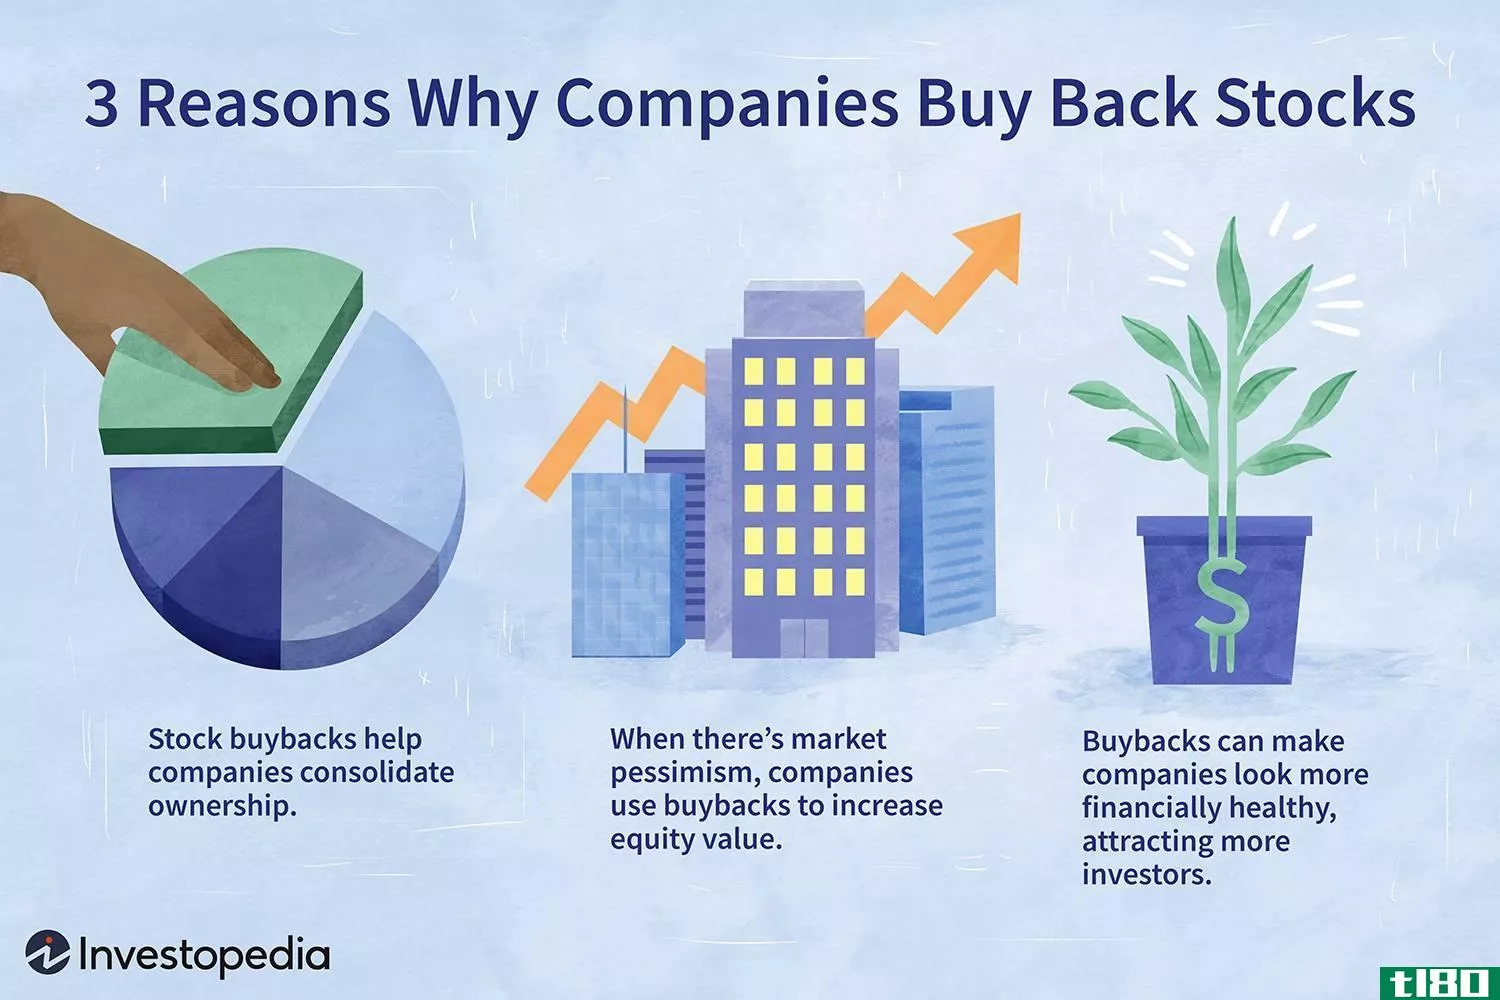 3 Reas*** Why Companies Buy Back Stocks